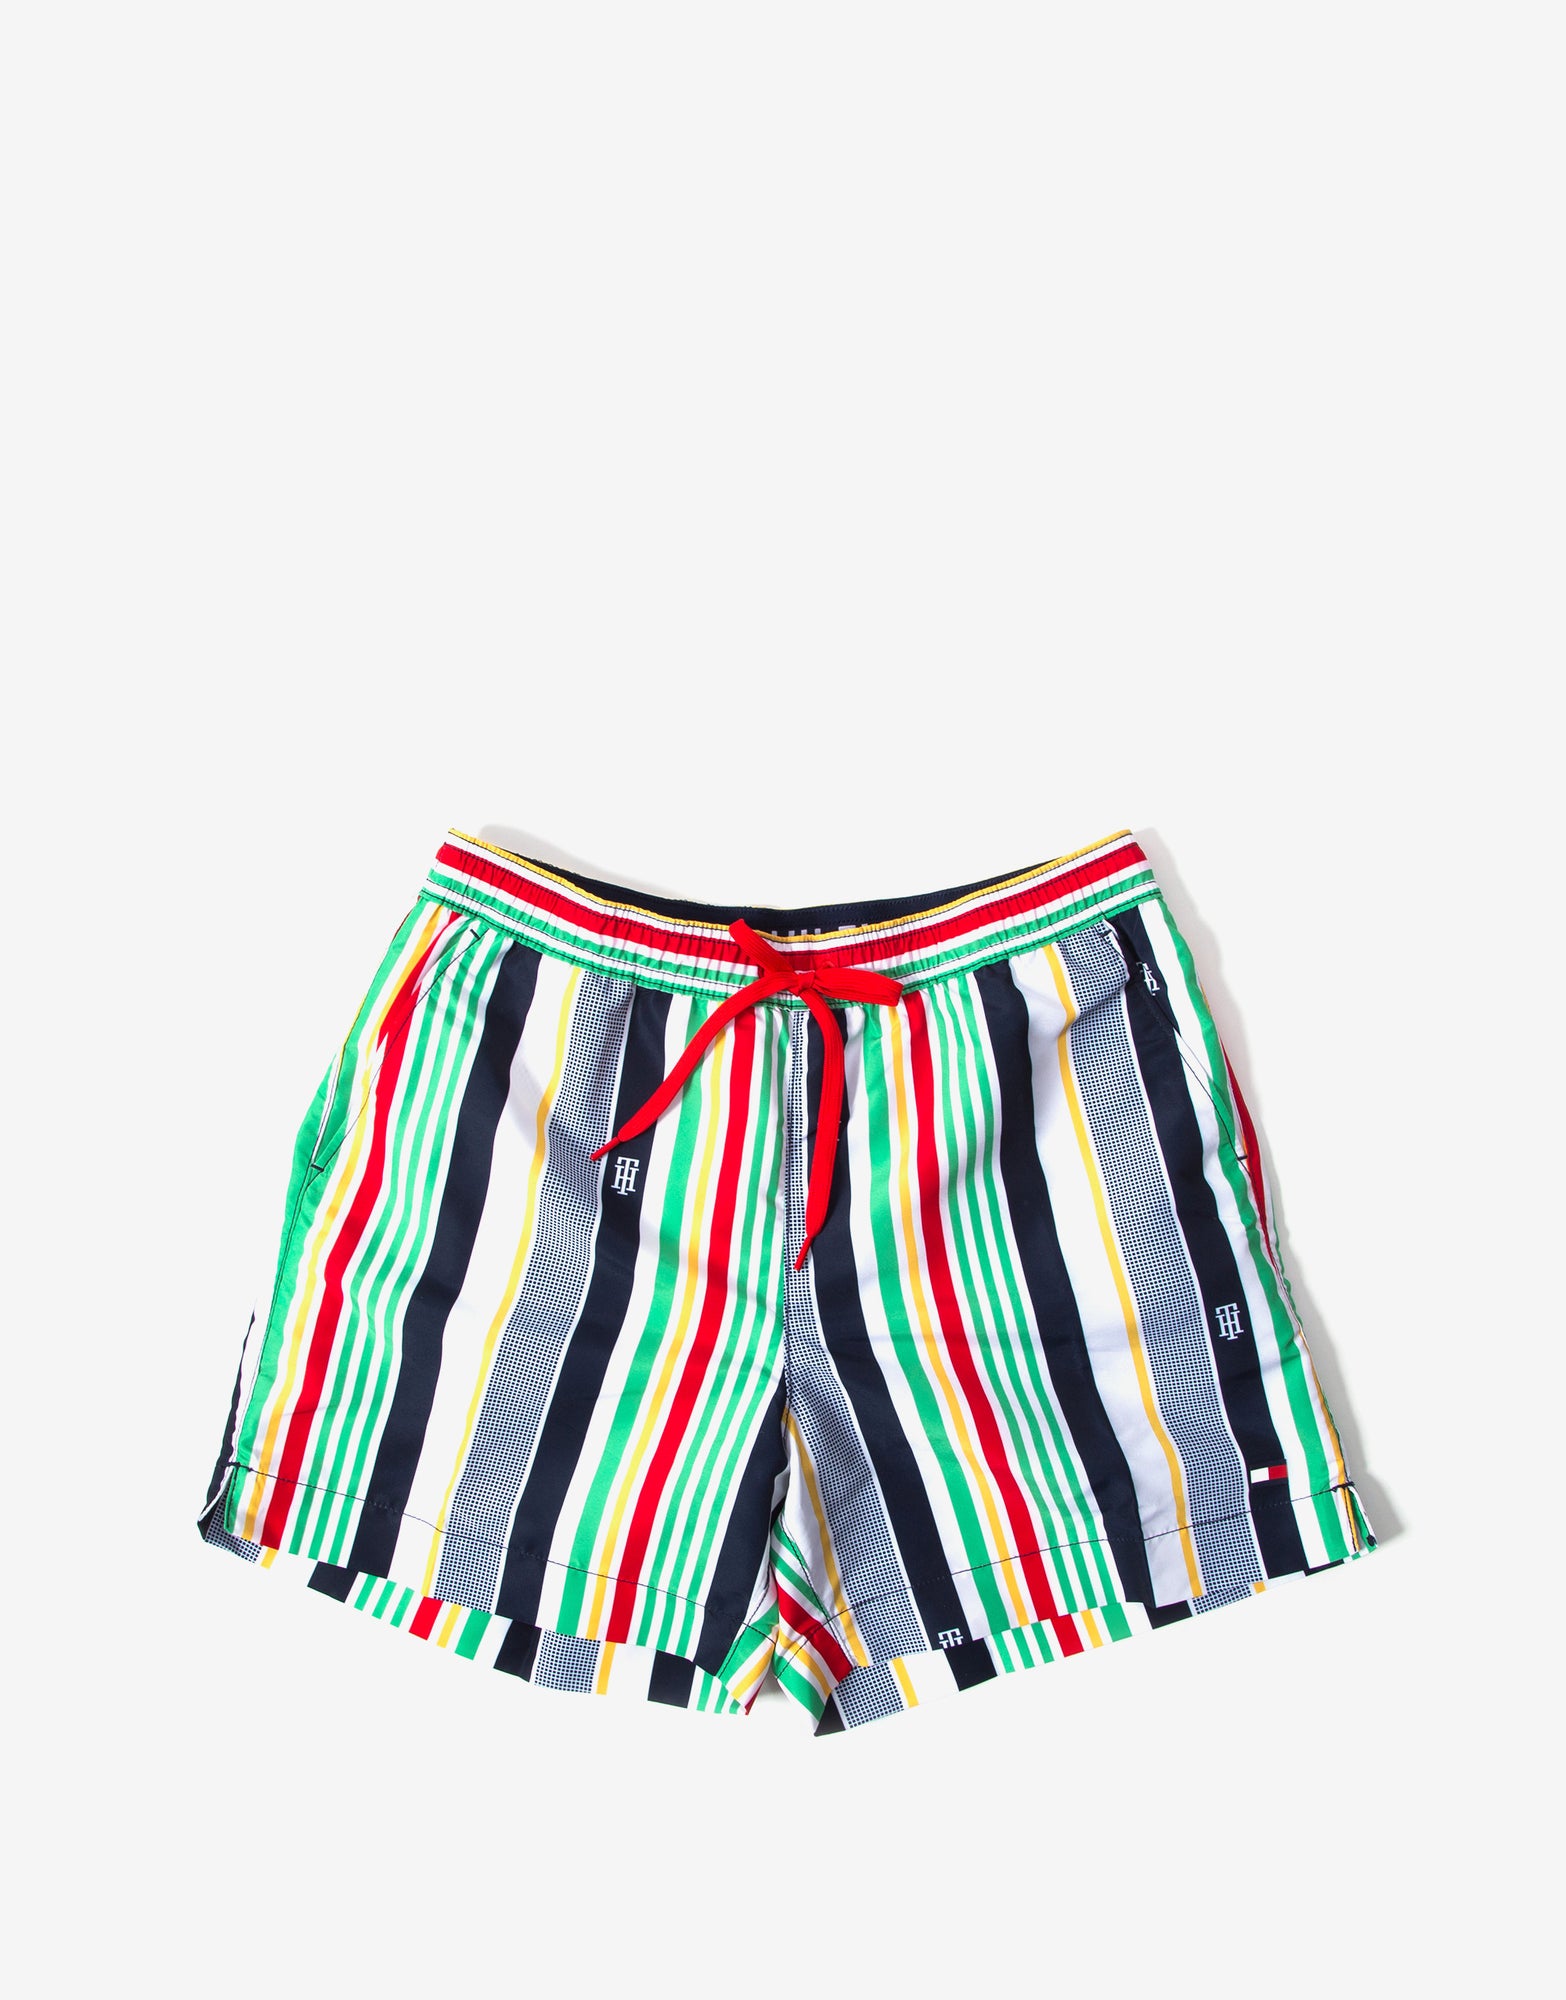 tommy hilfiger beach shorts